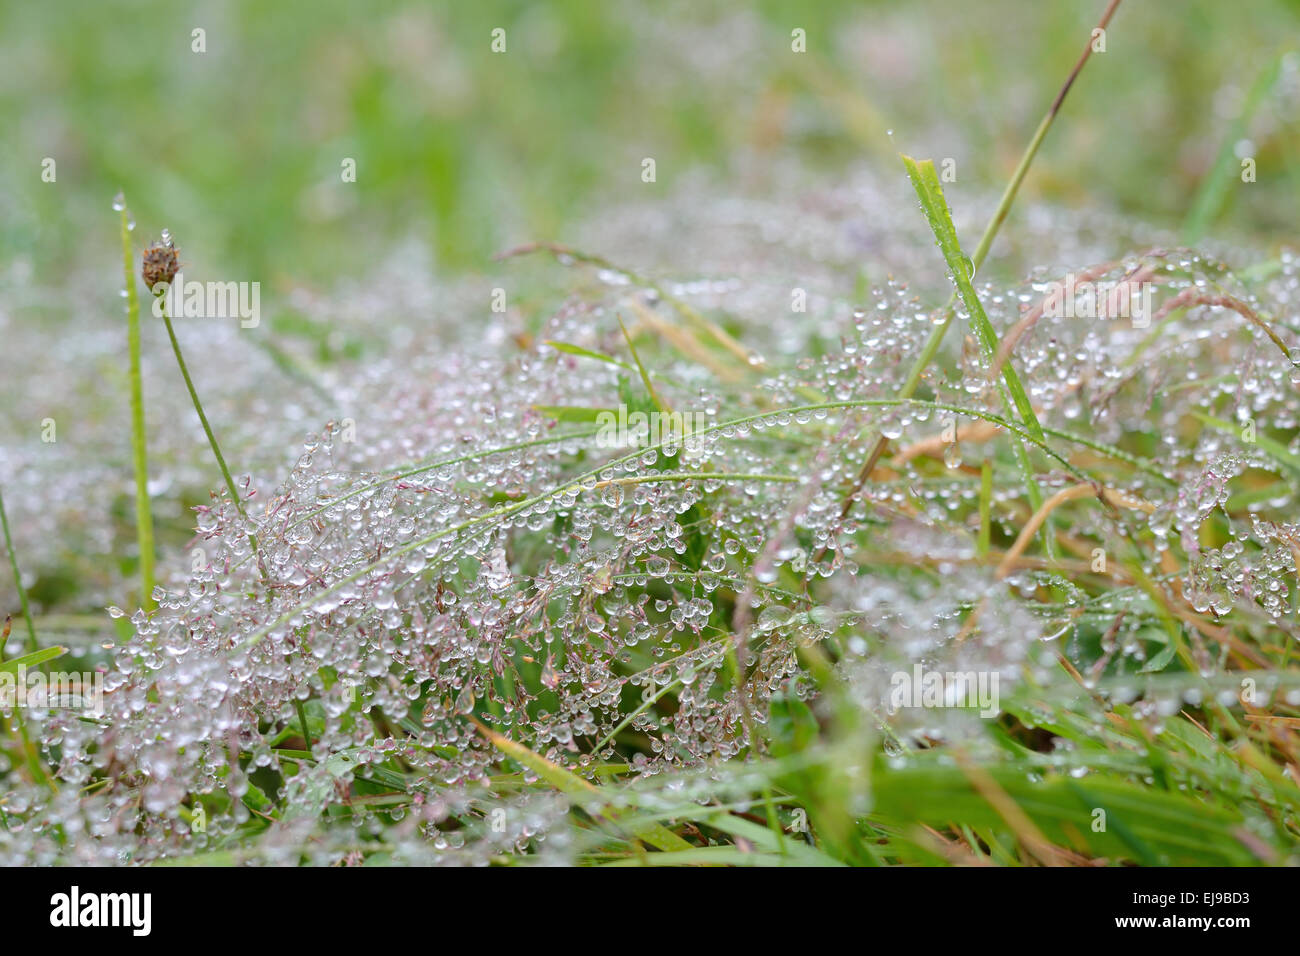 fine raindrops after rain on grass Stock Photo